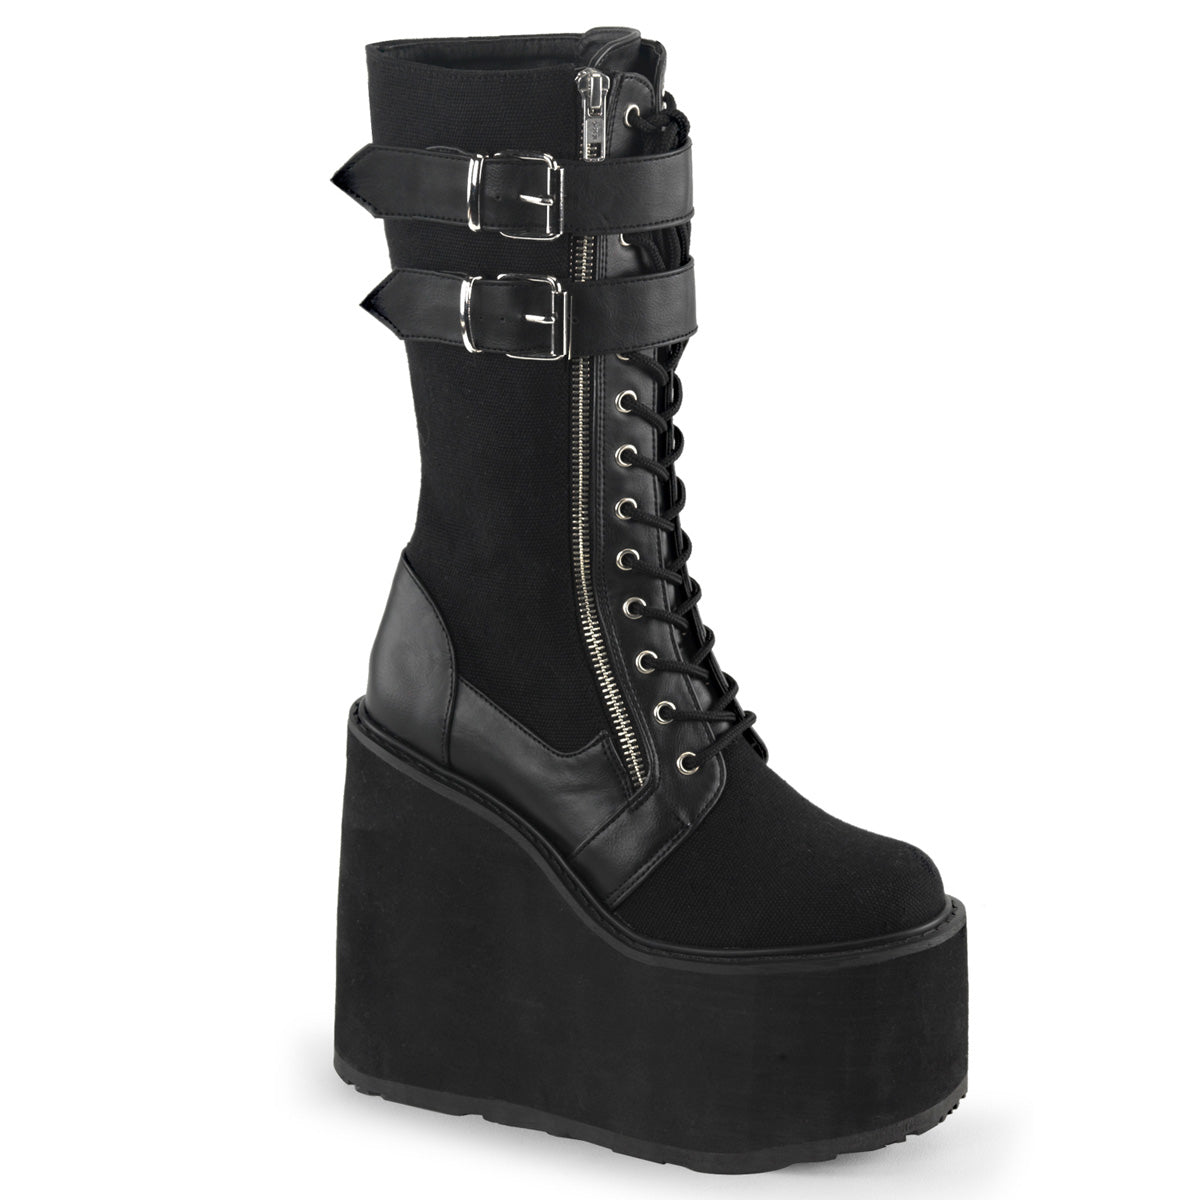 SWING-221 Alternative Footwear Demonia Women's Mid-Calf & Knee High Boots Blk Canvas-Vegan Leather